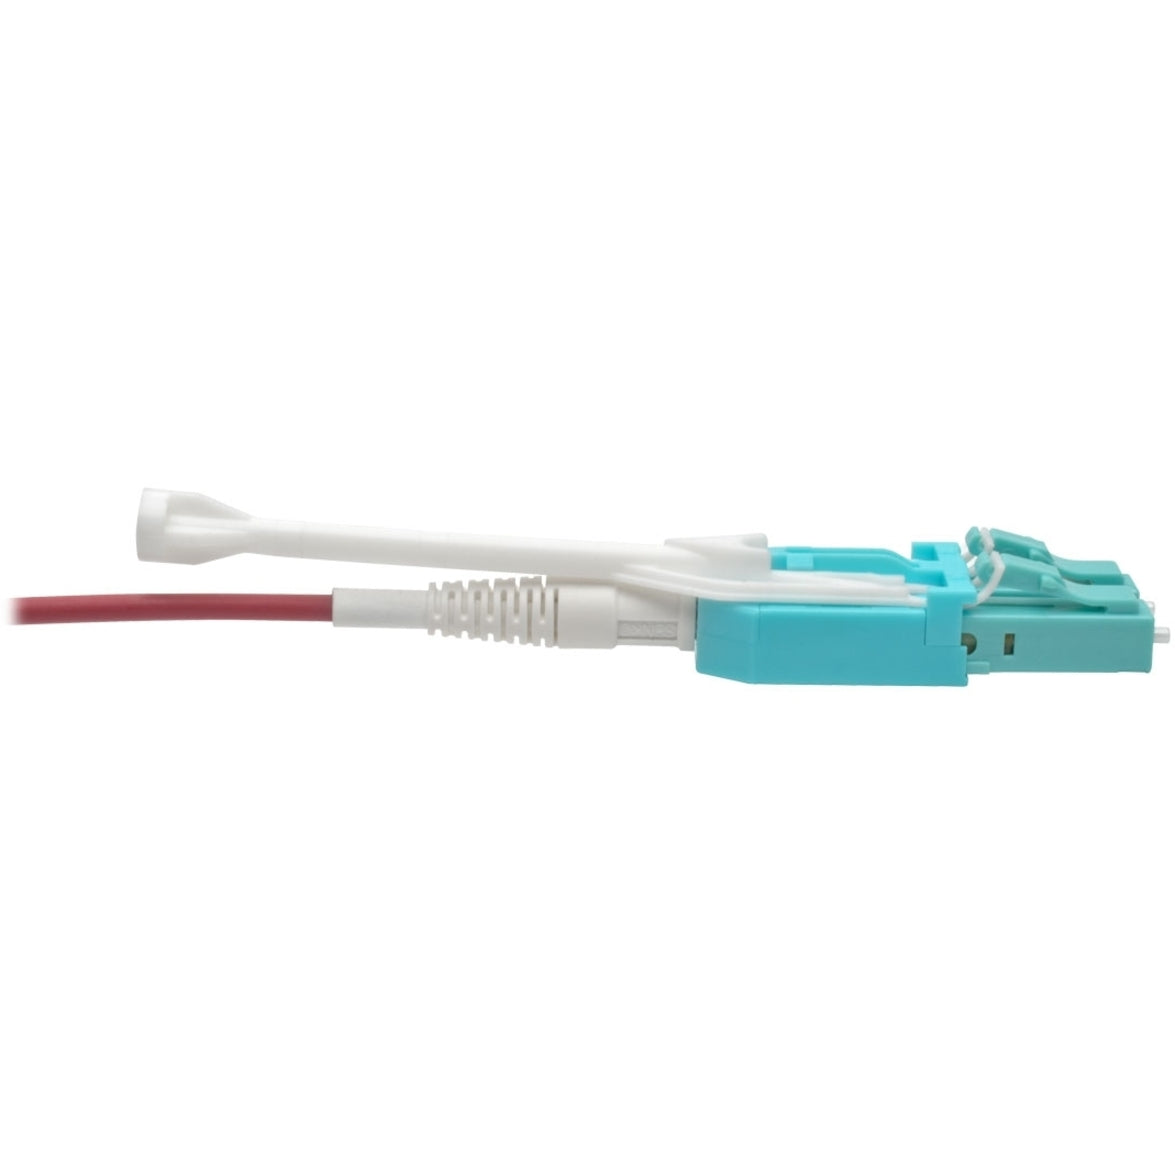 Tripp Lite N821-03M-MG-T Fiber Optic Network Cable, 10 ft, Multi-mode, 100 Gbit/s, Magenta